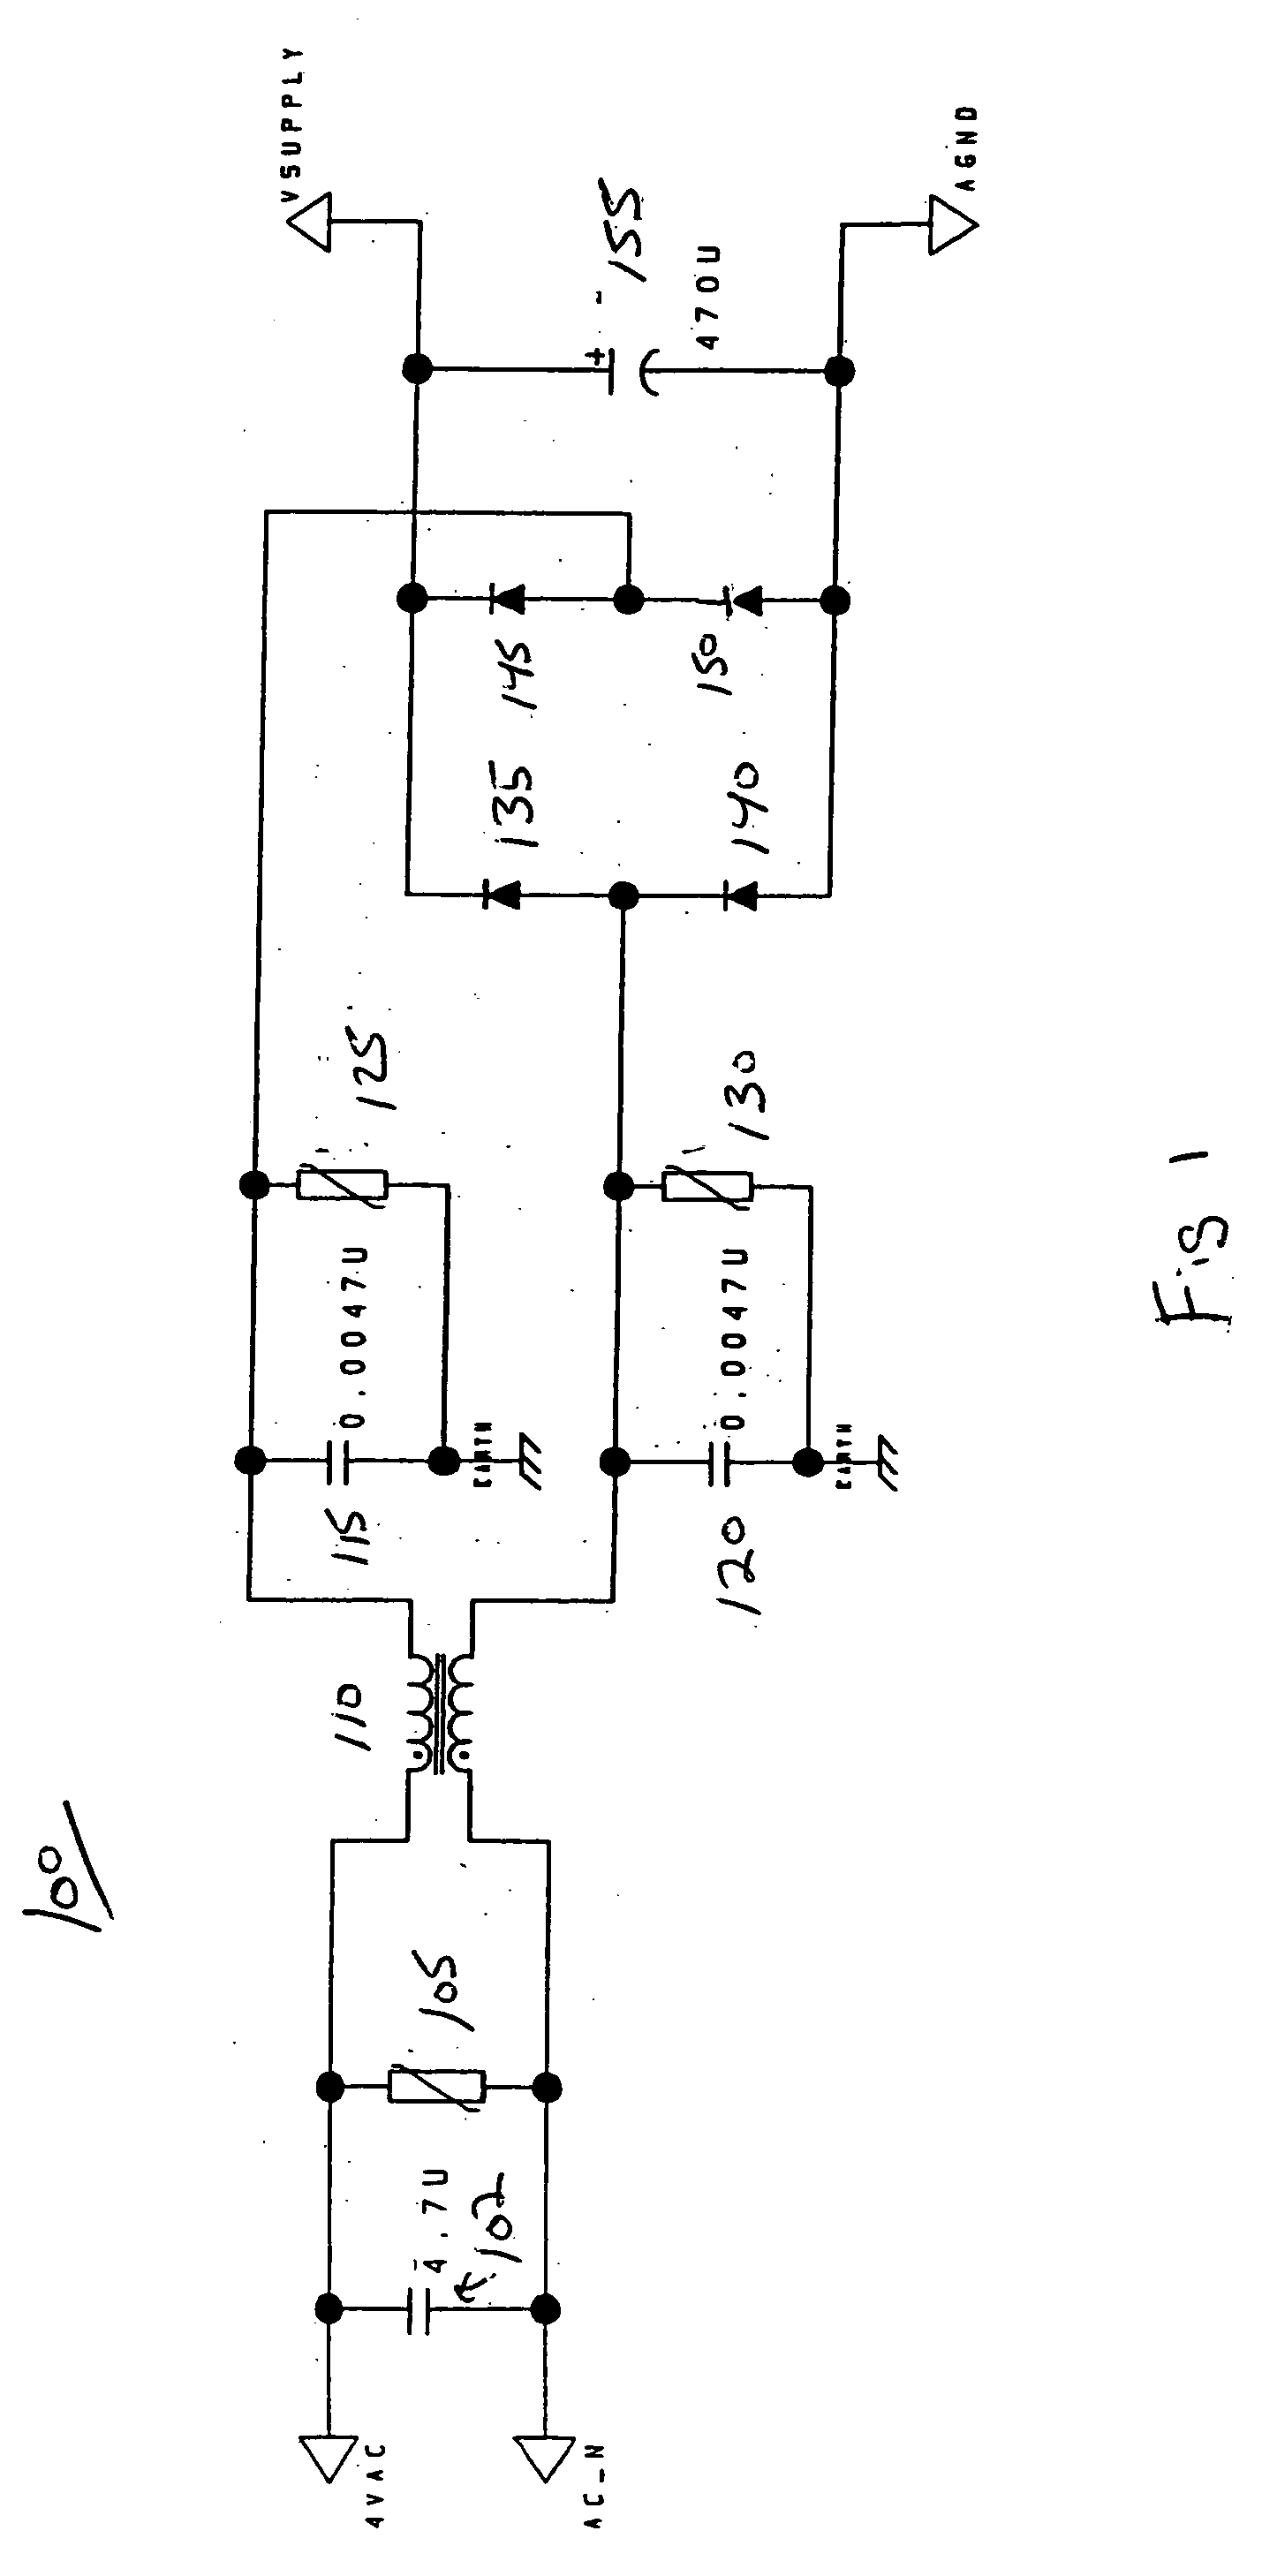 Fail-safe electric actuator using high voltage capacitors